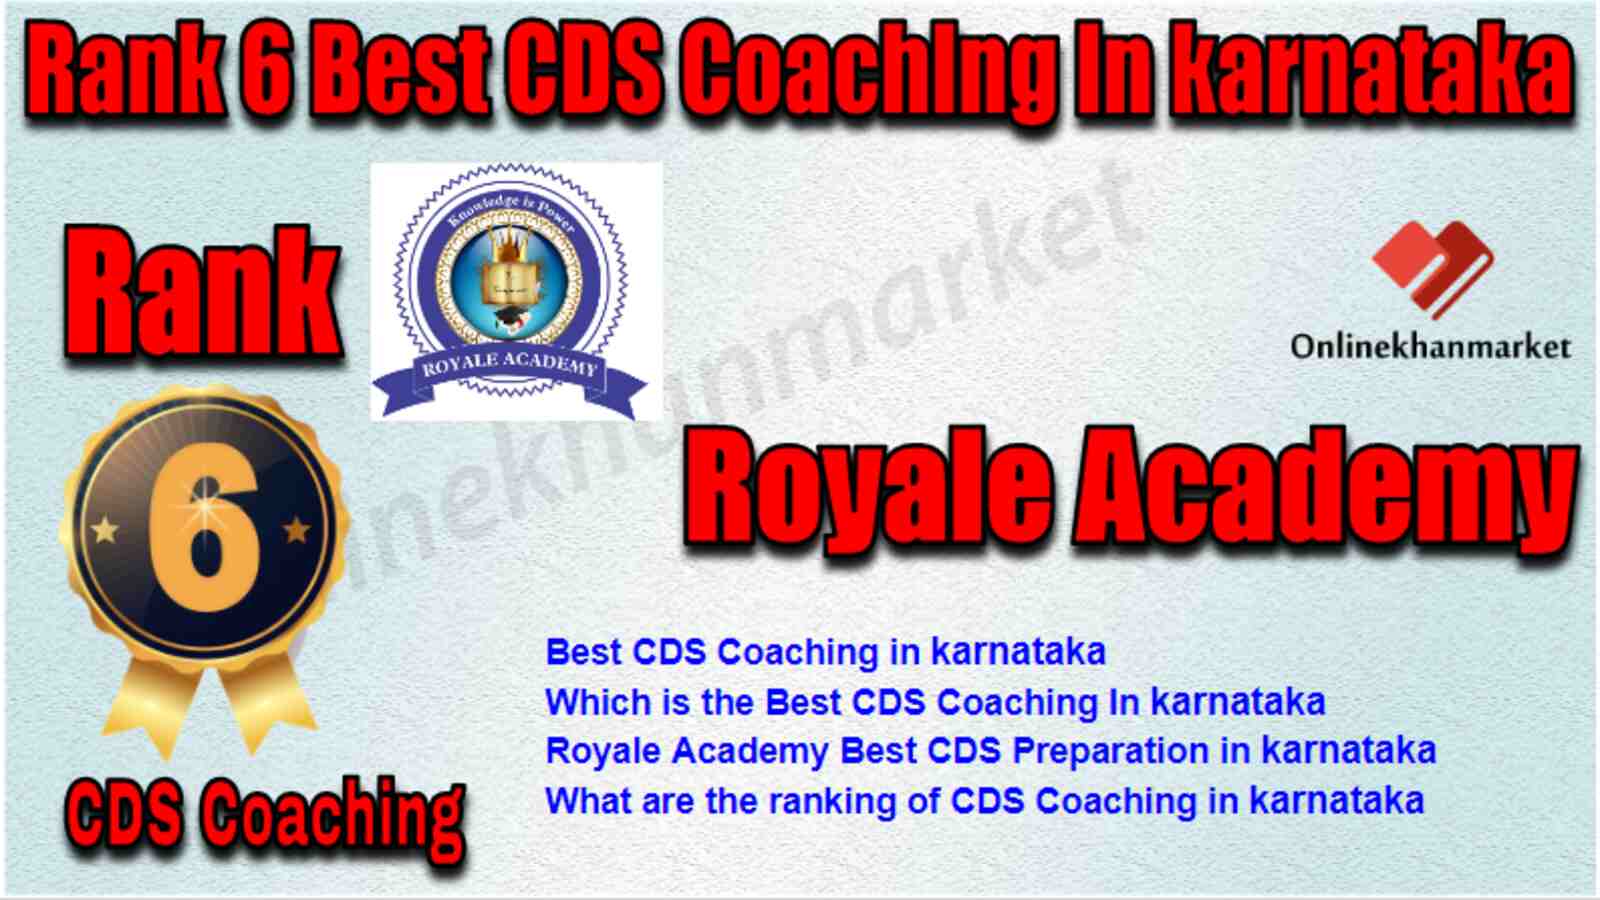 Rank 6 Best CDS Coaching in Karnataka